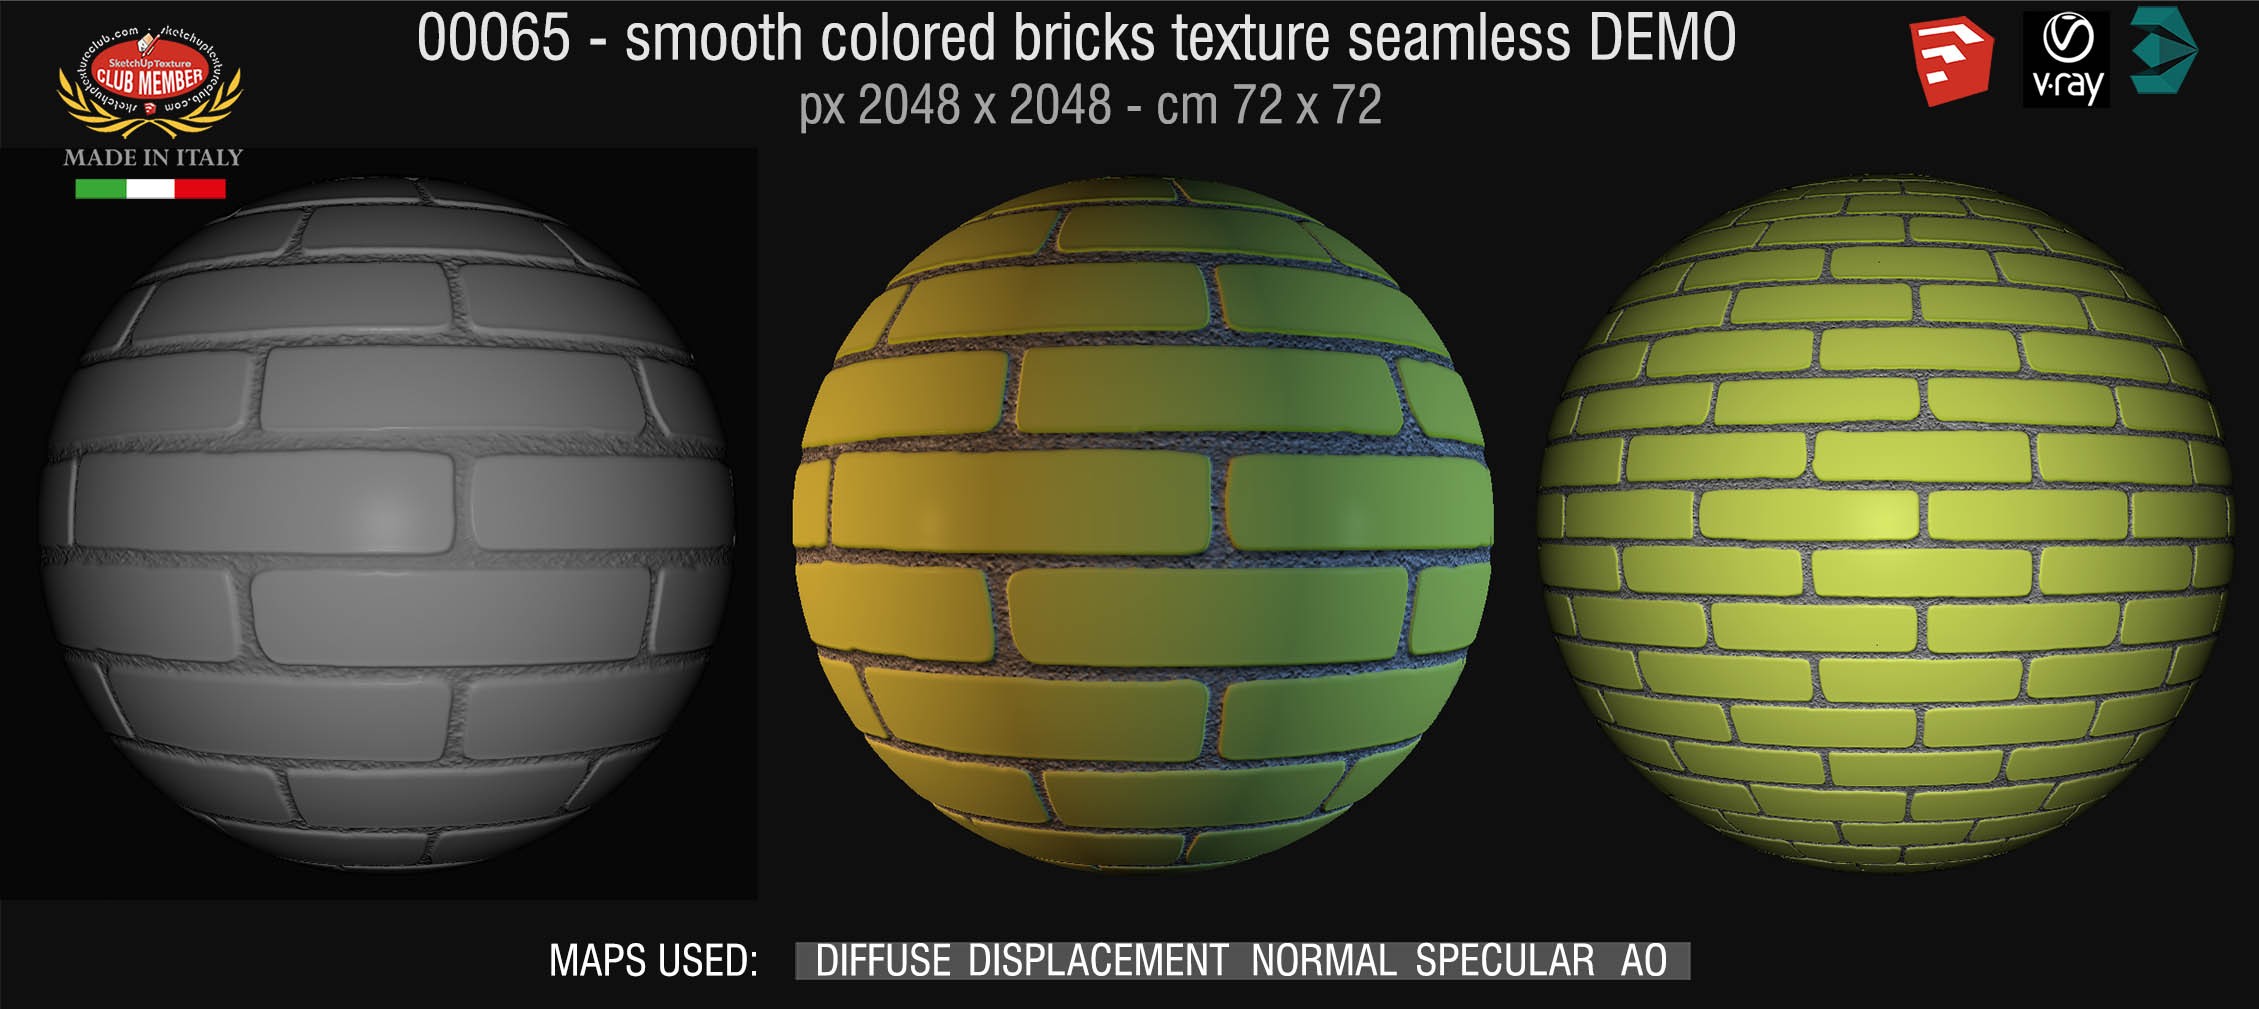 00065 smooth colored bricks texture seamless + maps DEMO